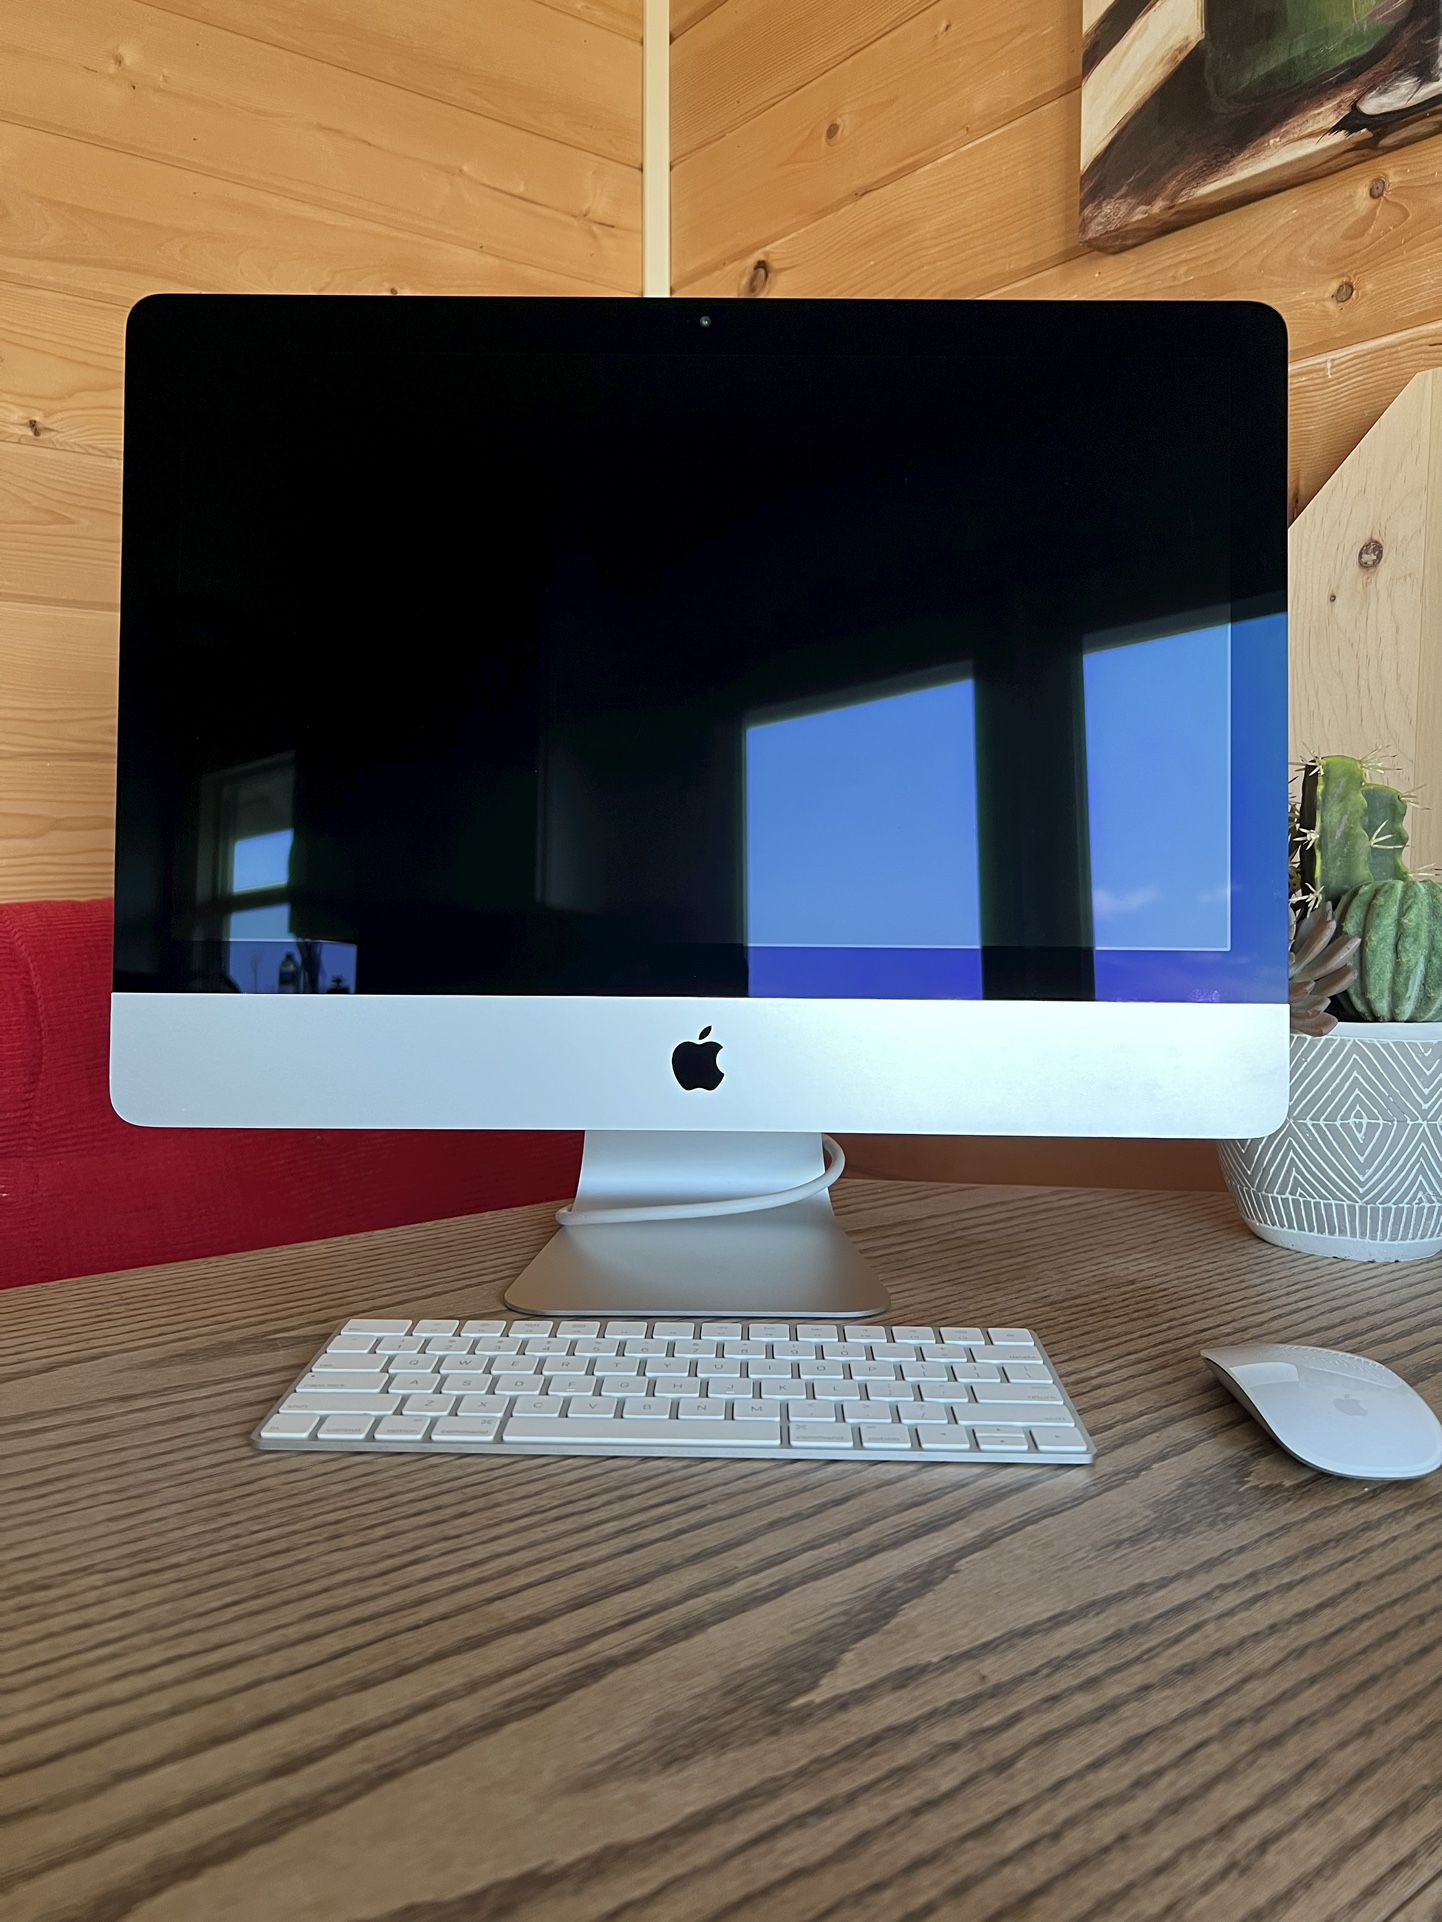 Mac Desktop (late 2015)